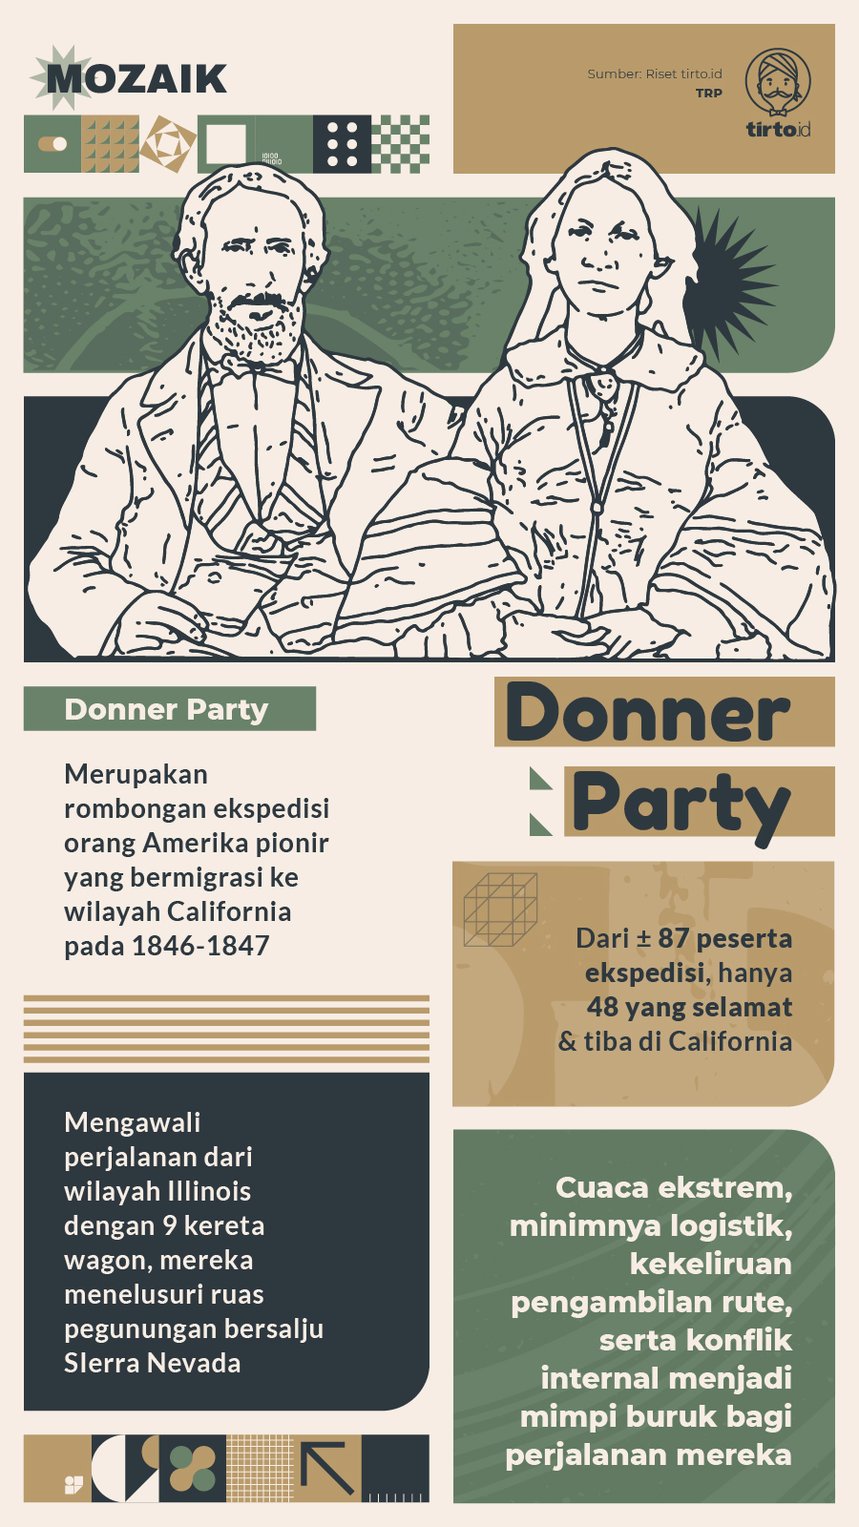 Infografik Mozaik Donner Party